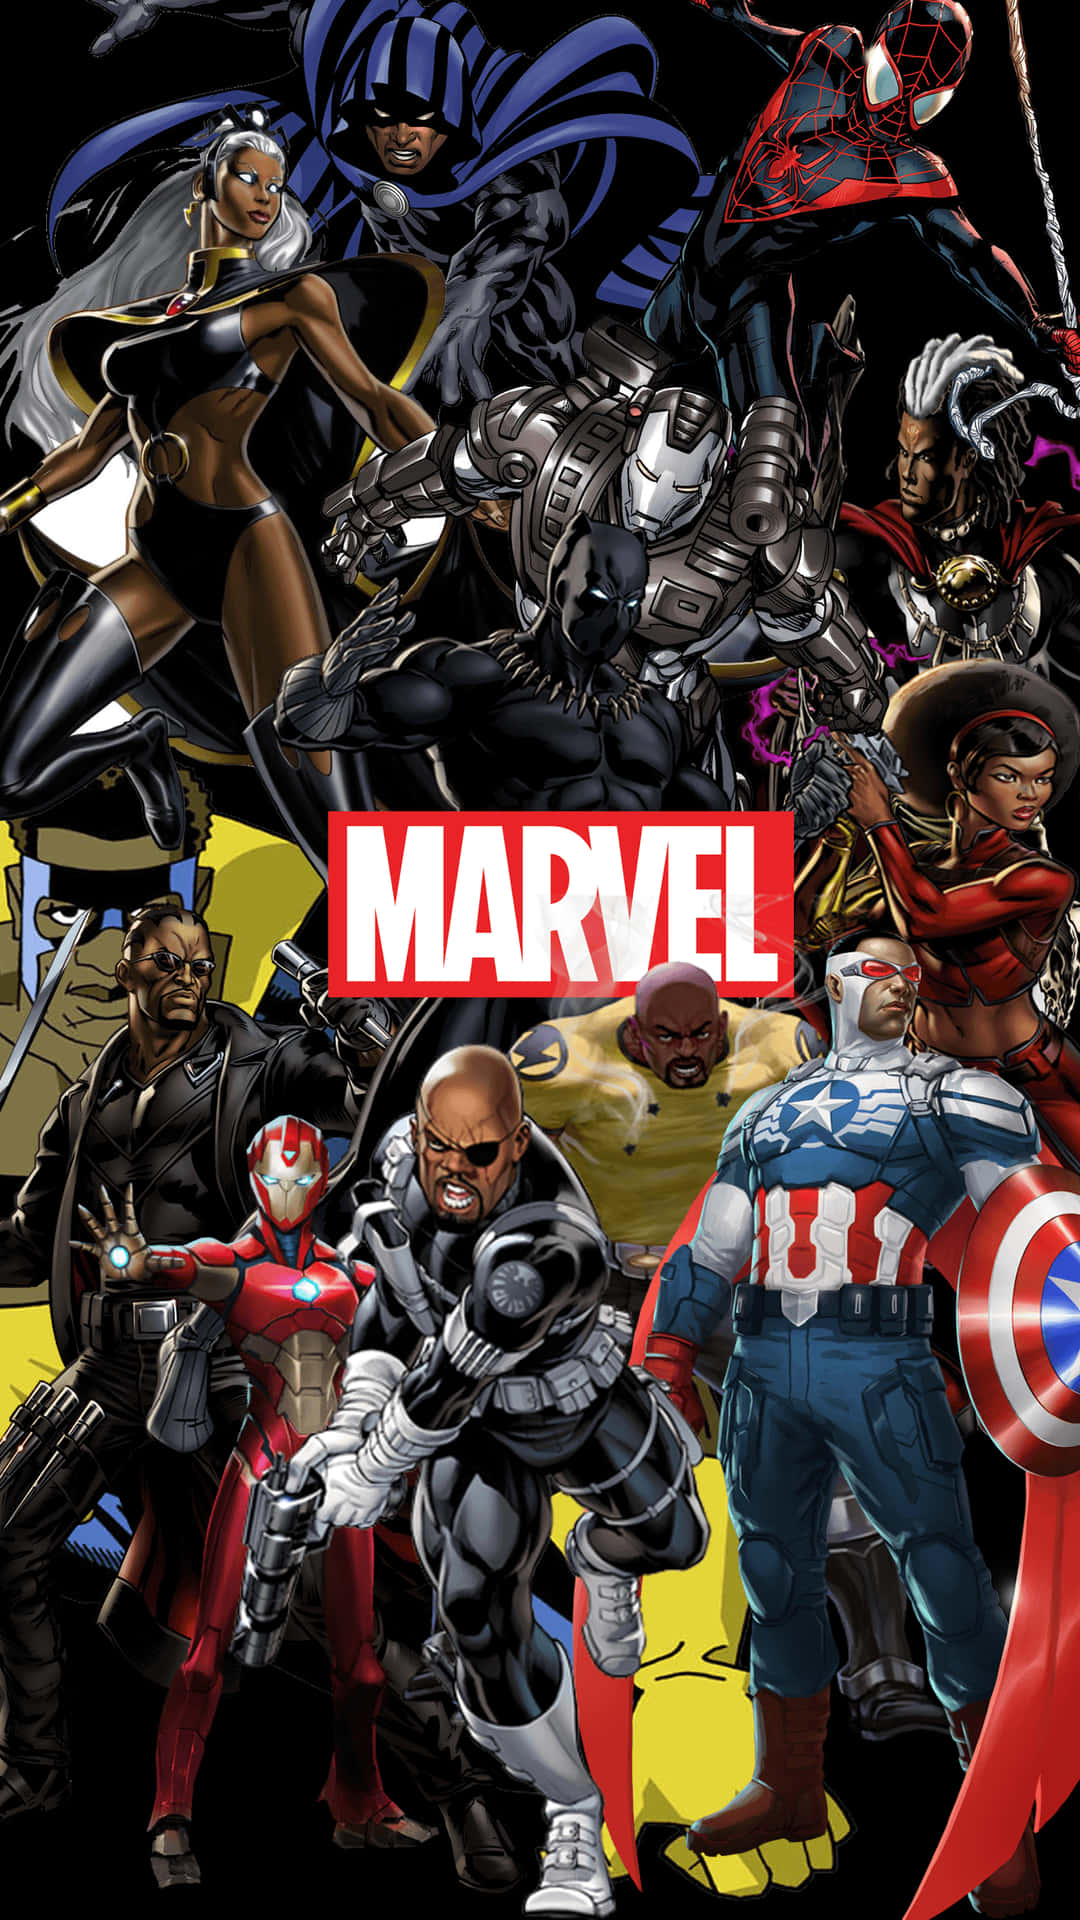 A Clash Of Titan: Marvel's Iron Man Vs. Captain America In A Fierce Battle